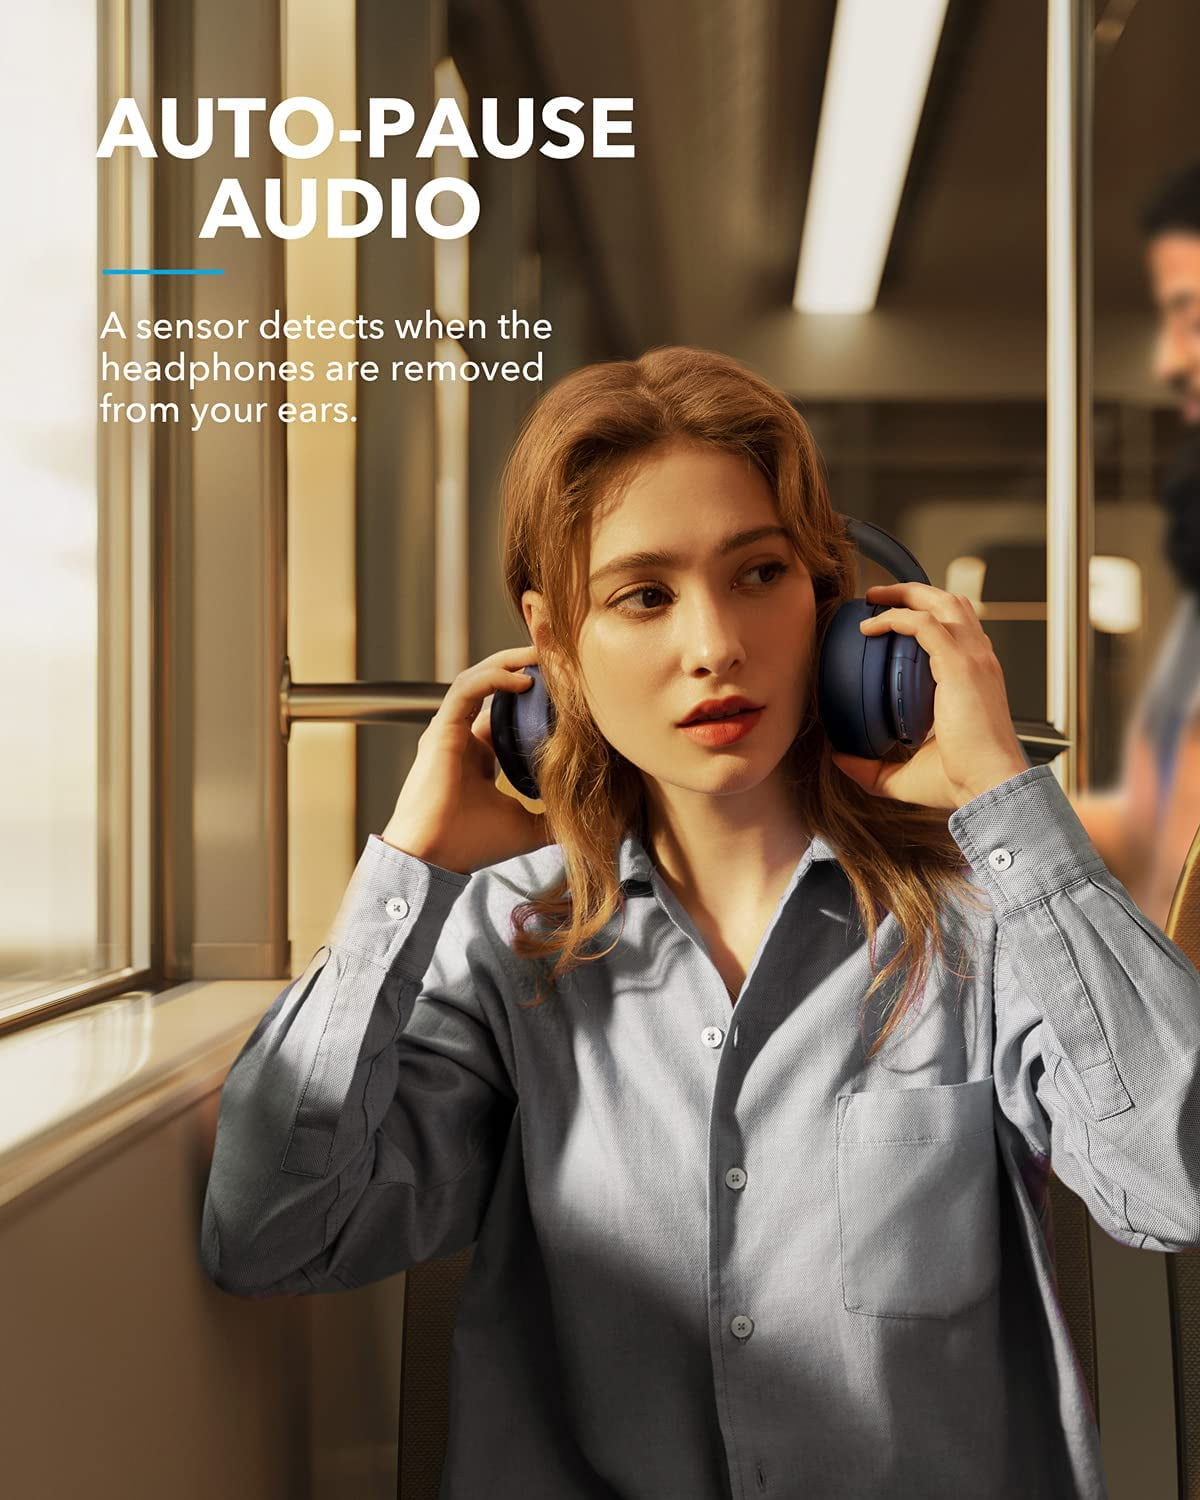 On-Ear Headphones, Anker Life Q35 Dark Blue Bluetooth Headset